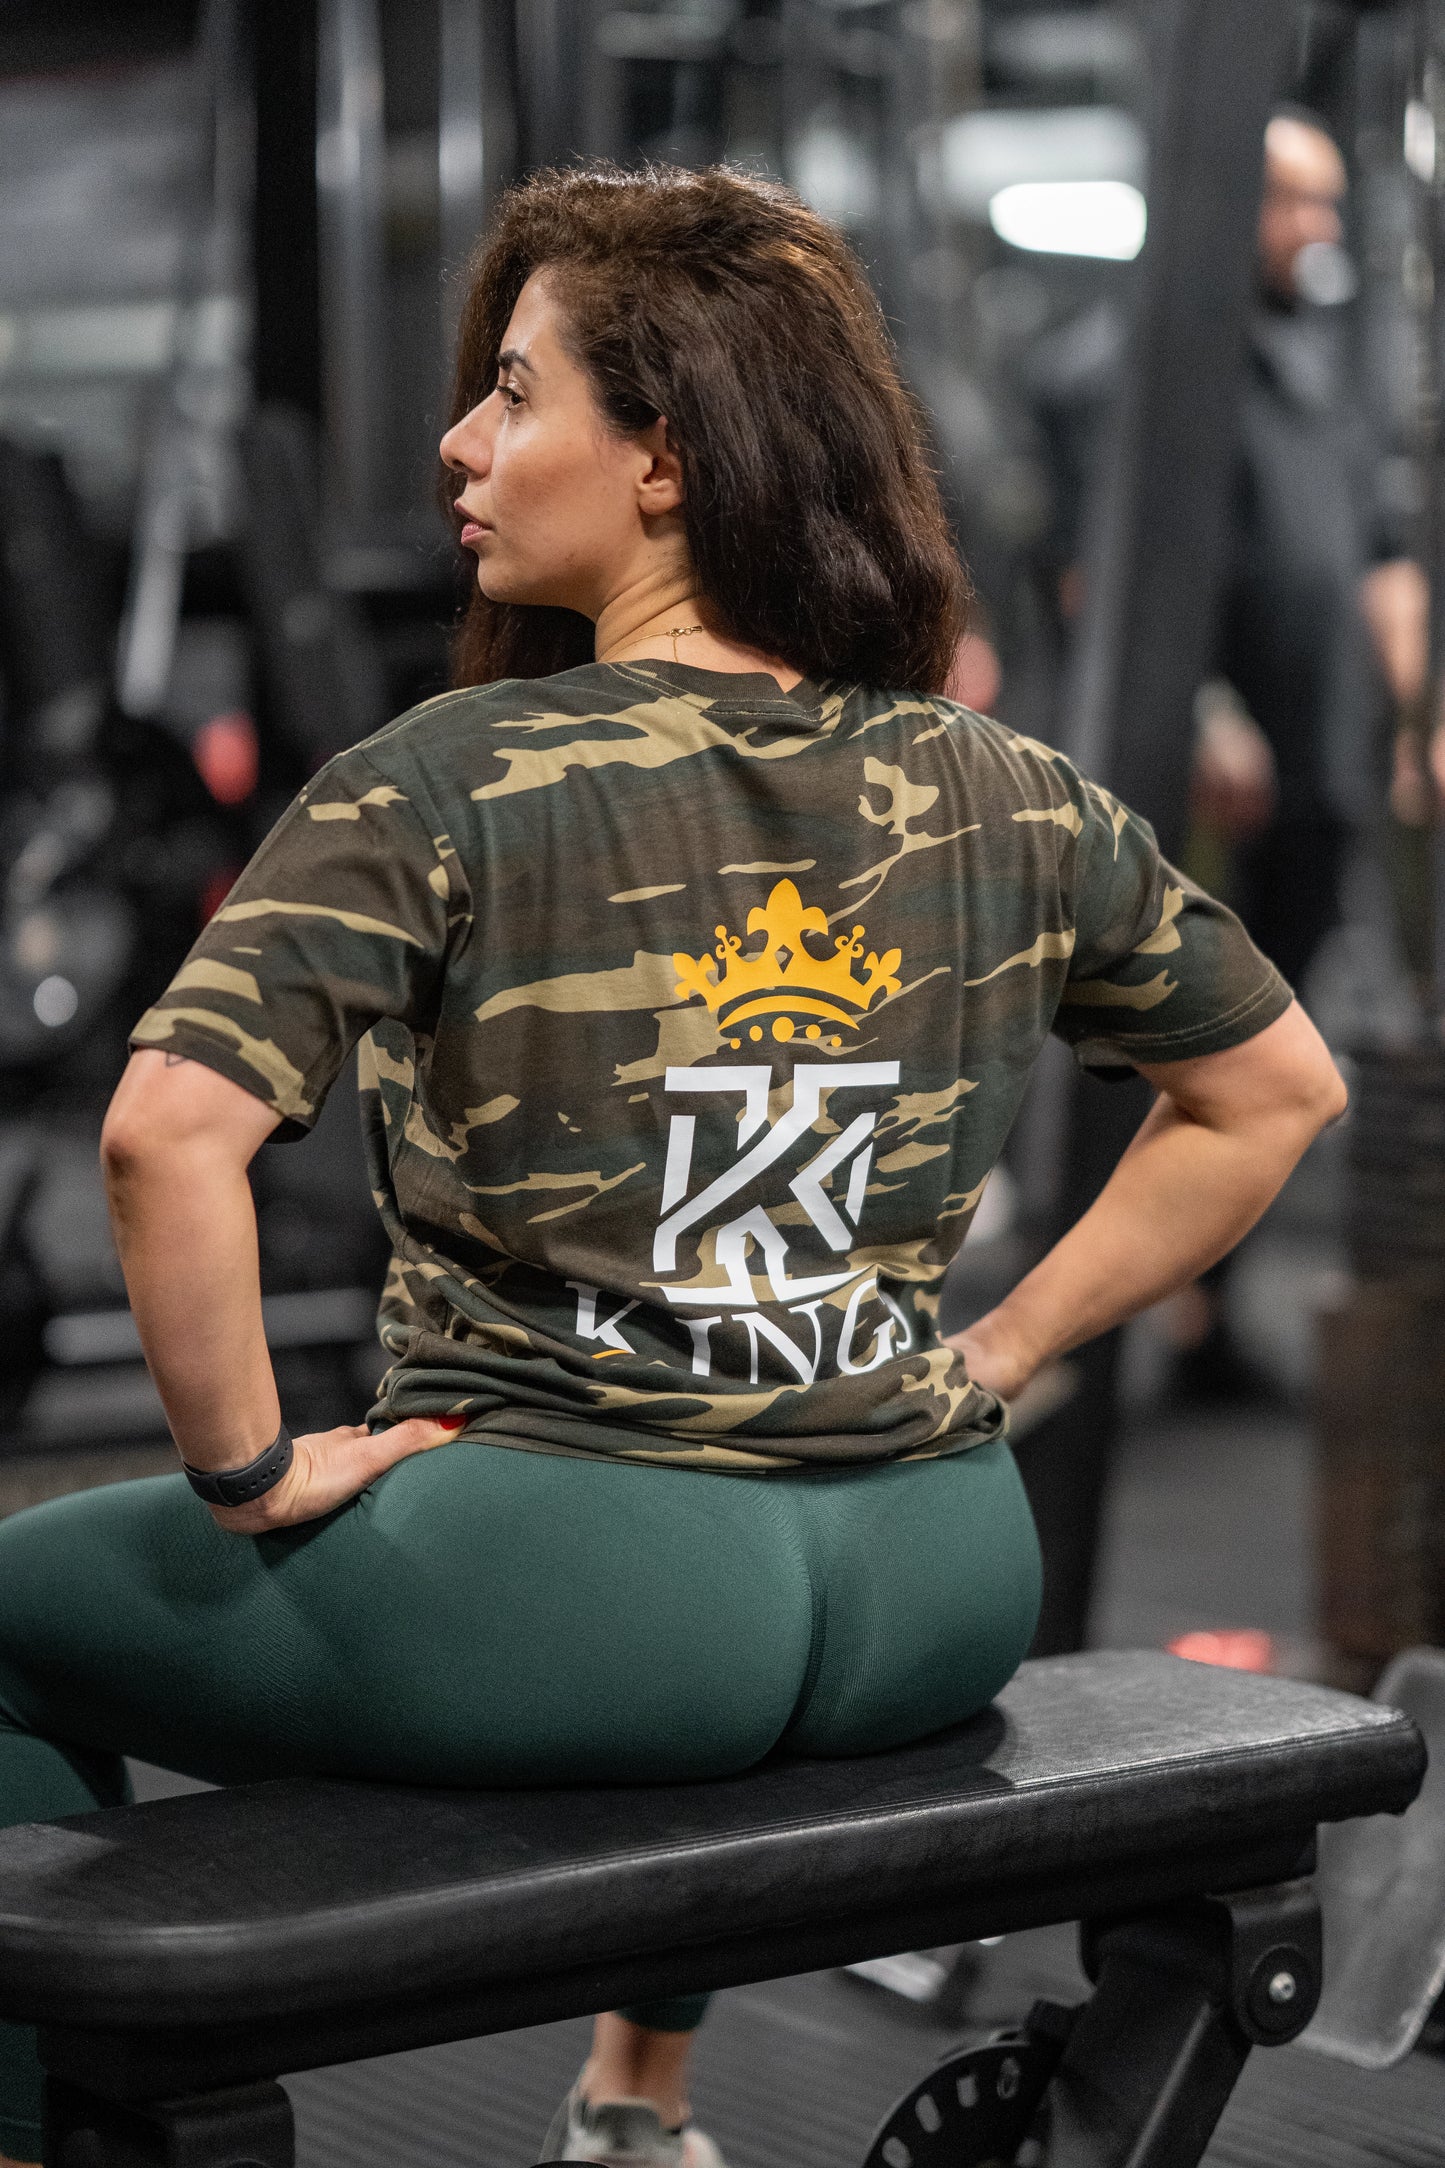 kingsgym logo on cameo tshirt women in gym